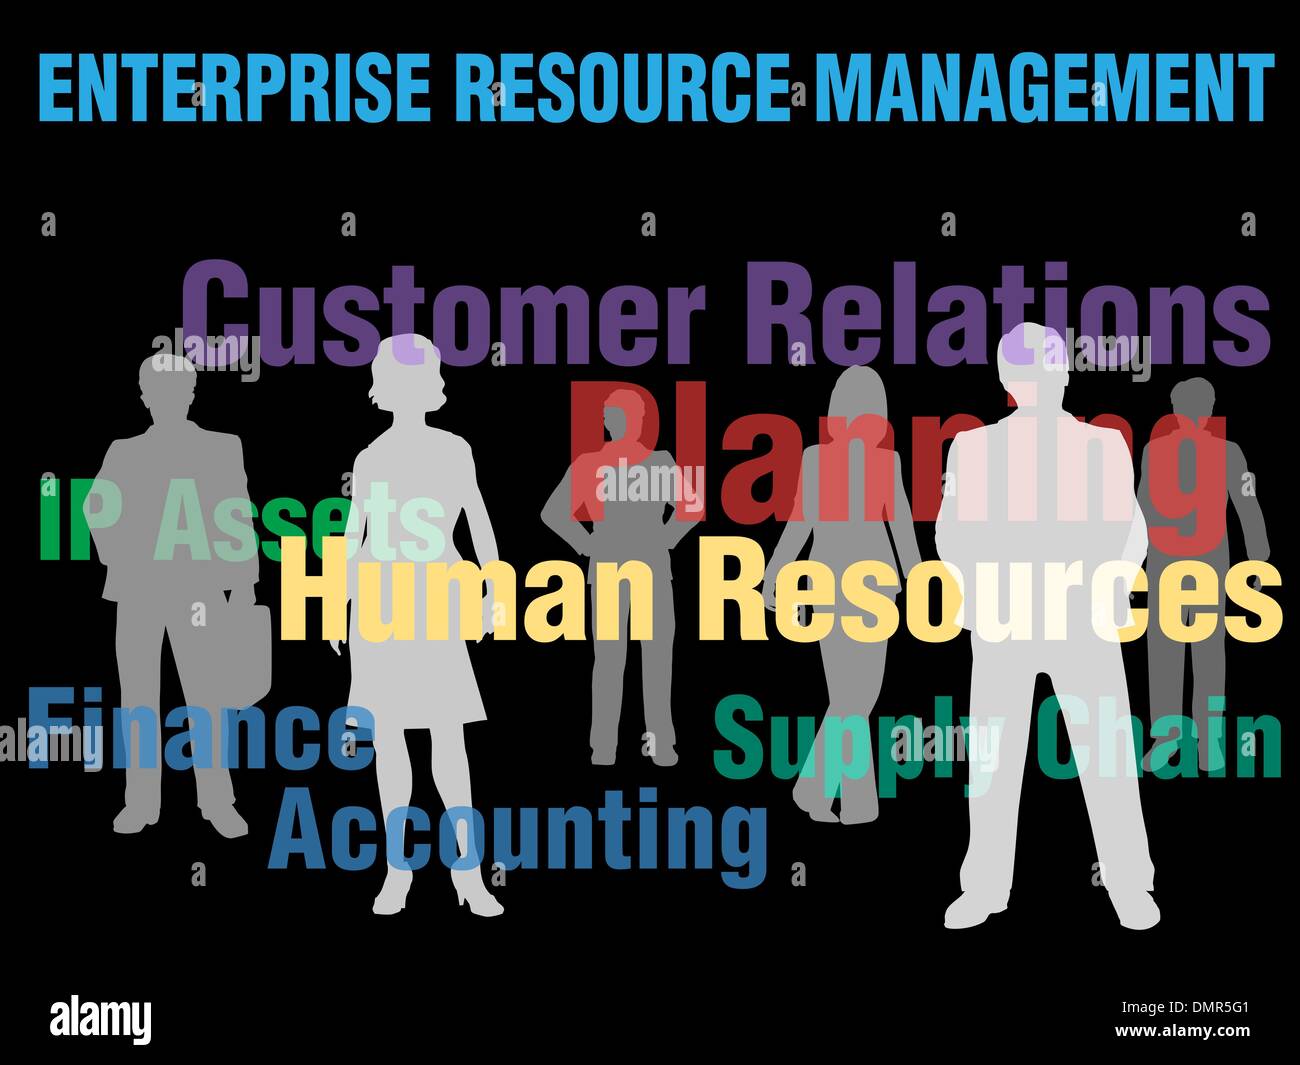 ERM Enterprise Resource Management business people Stock Vector